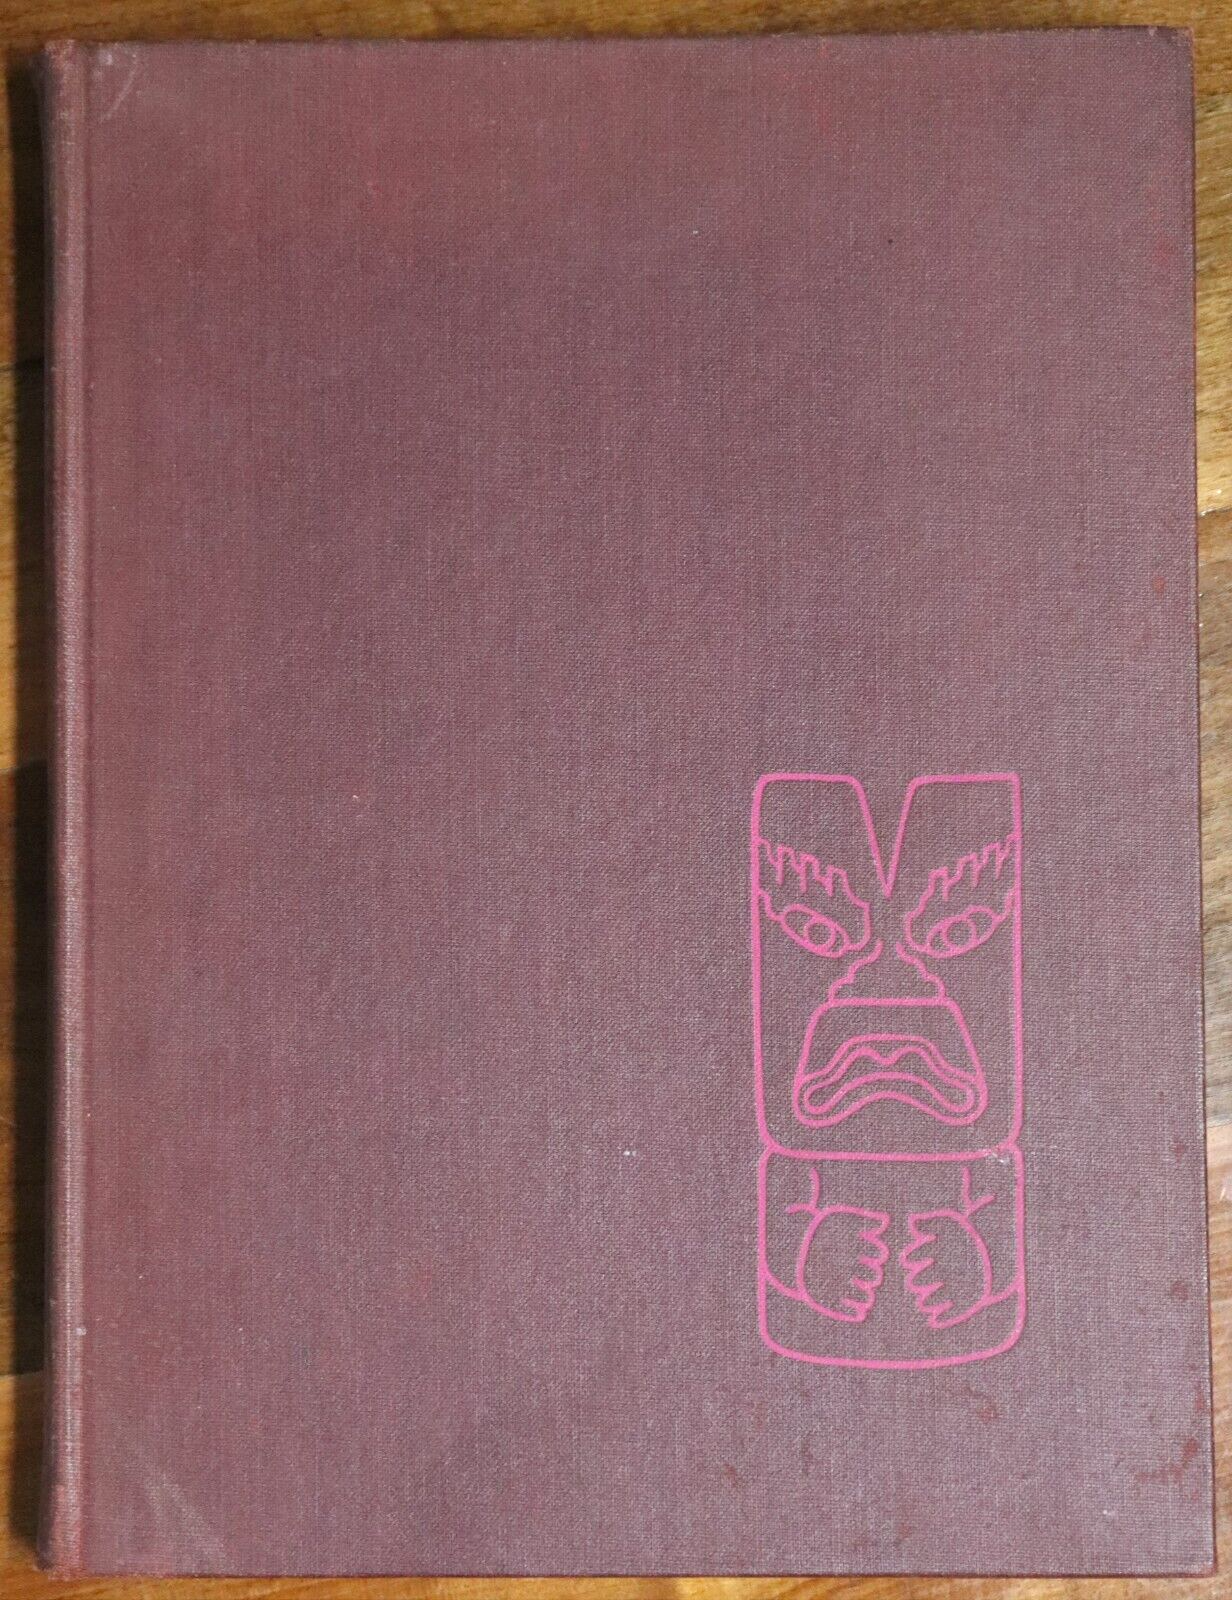 1940 Twenty Centuries Of Mexican Art 1st Edition Mexican Art Book